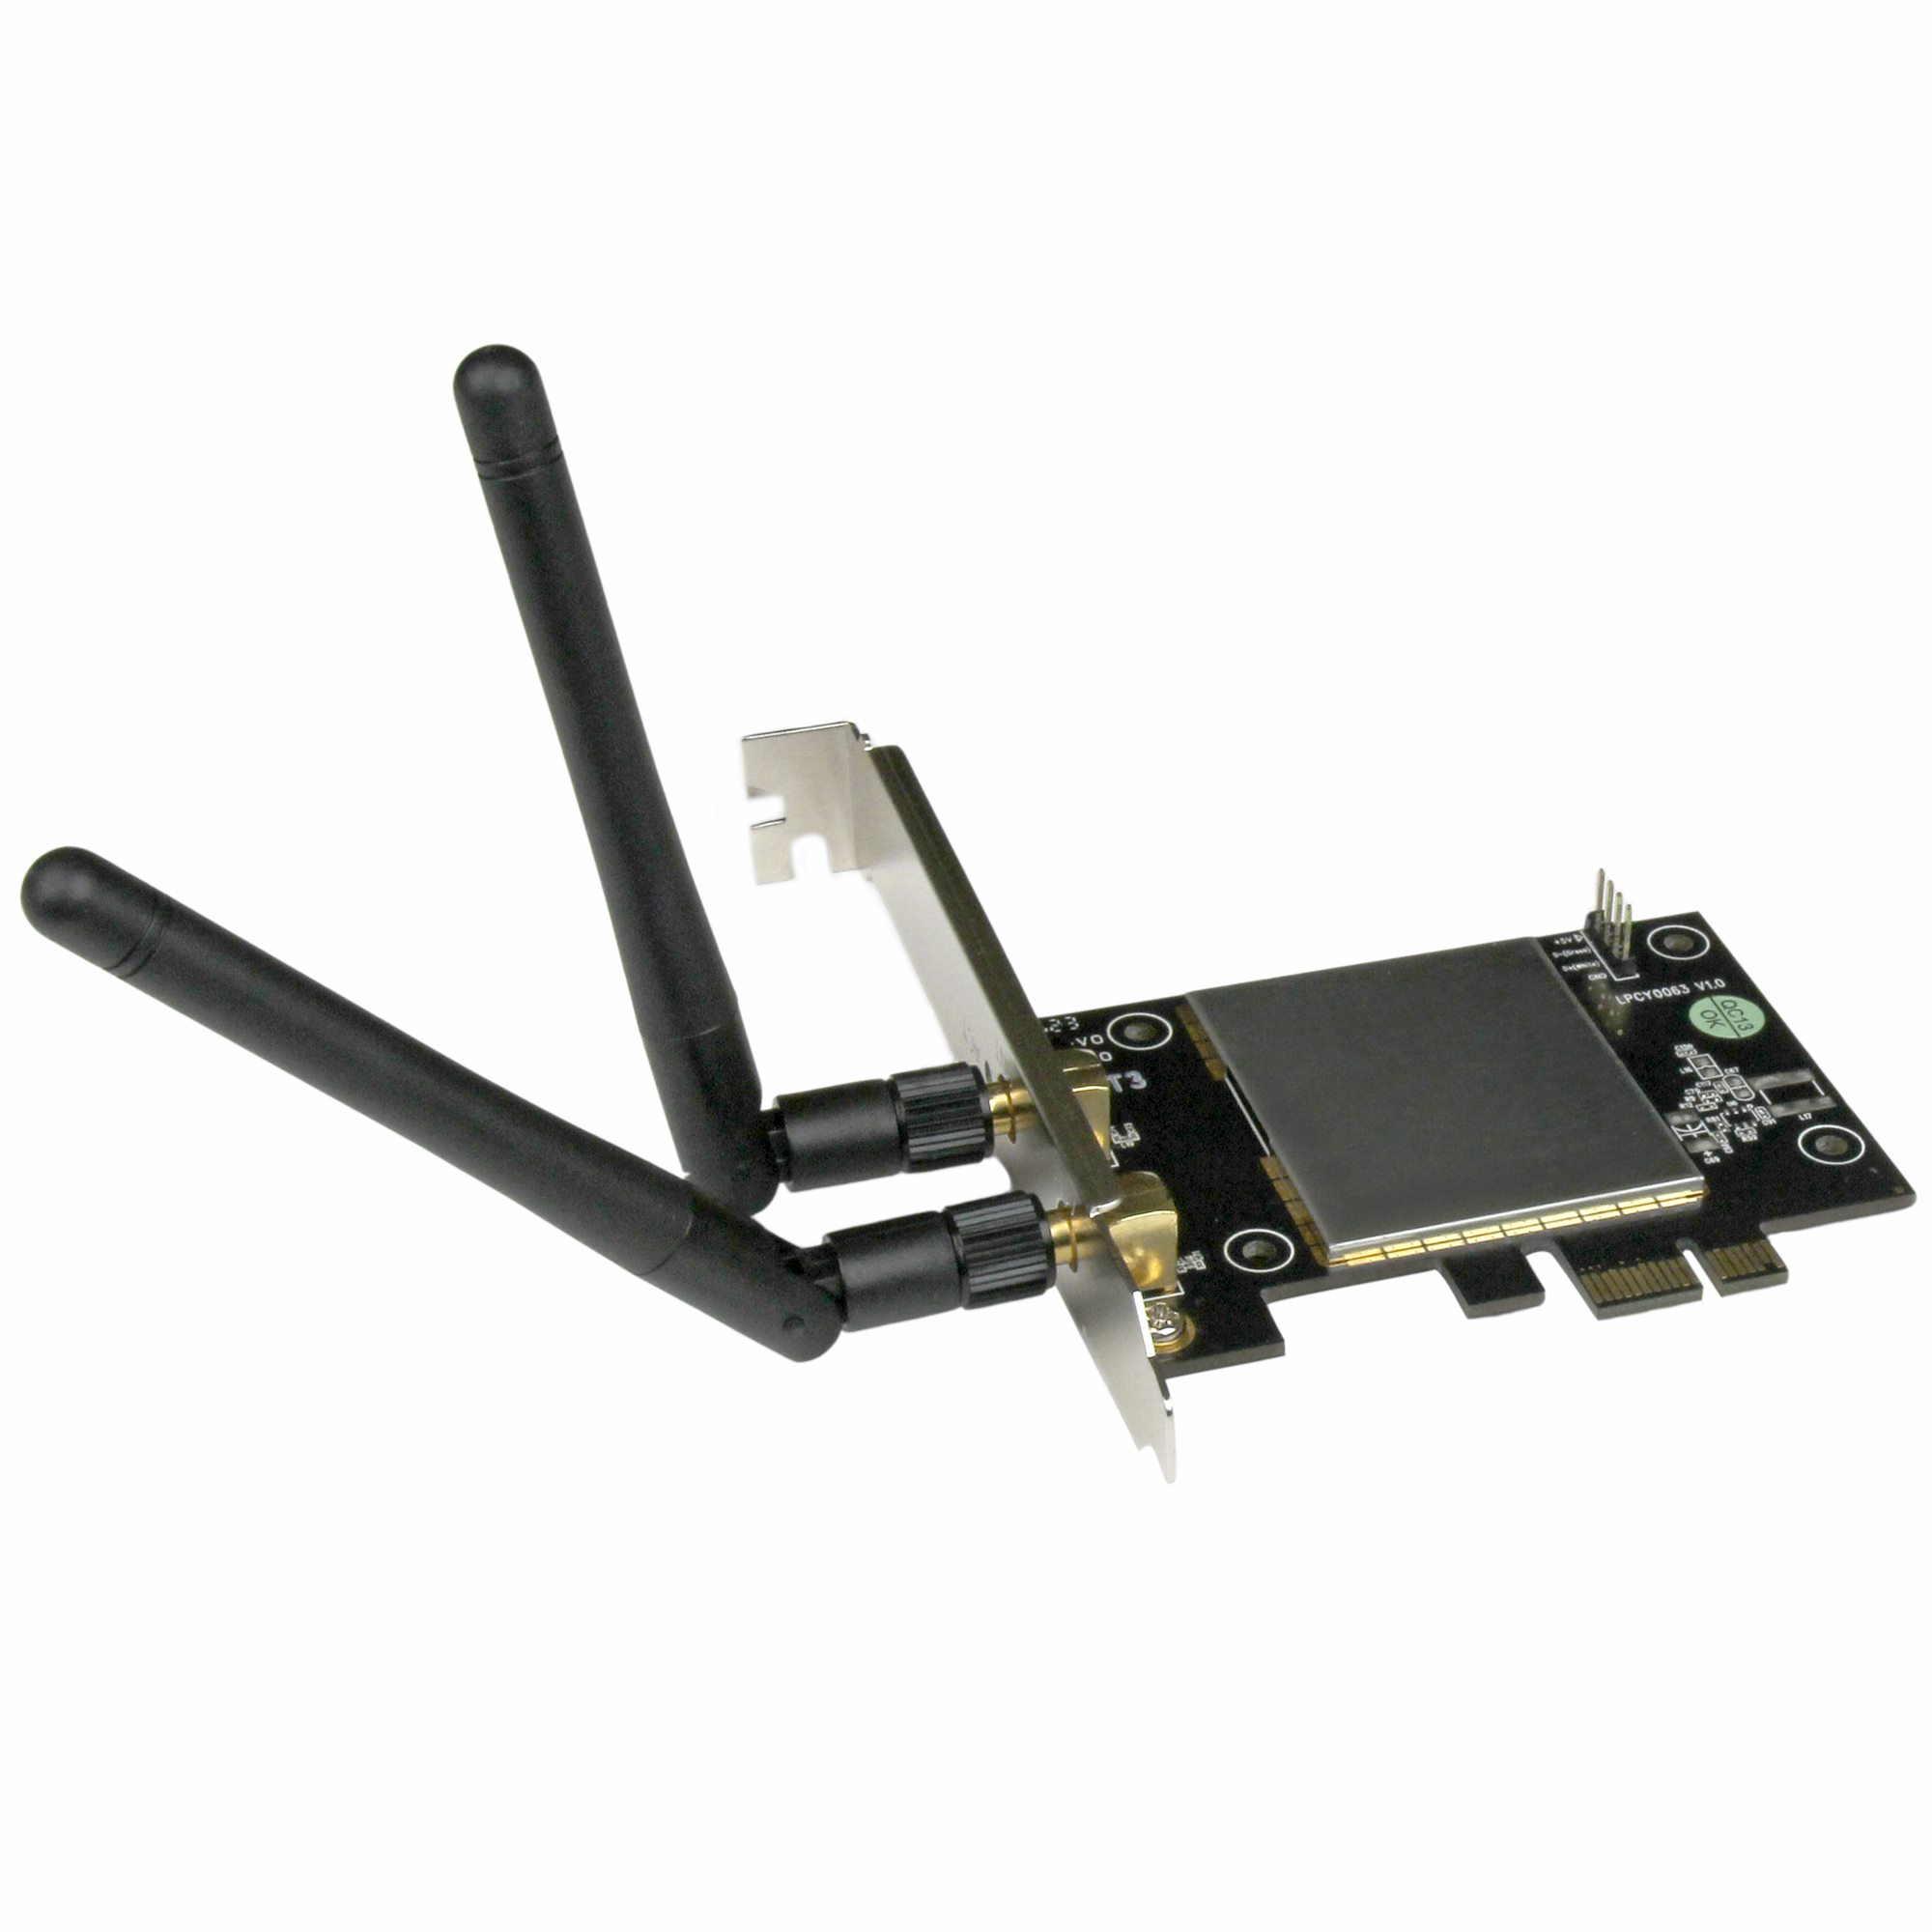 Asus 802.11. Ac600 Wireless Dual Band PCI Express Adapter. 802.11AC адаптер. Wi-Fi адаптер STARTECH.com usb300wn2x2d. PCI WIFI адаптер.